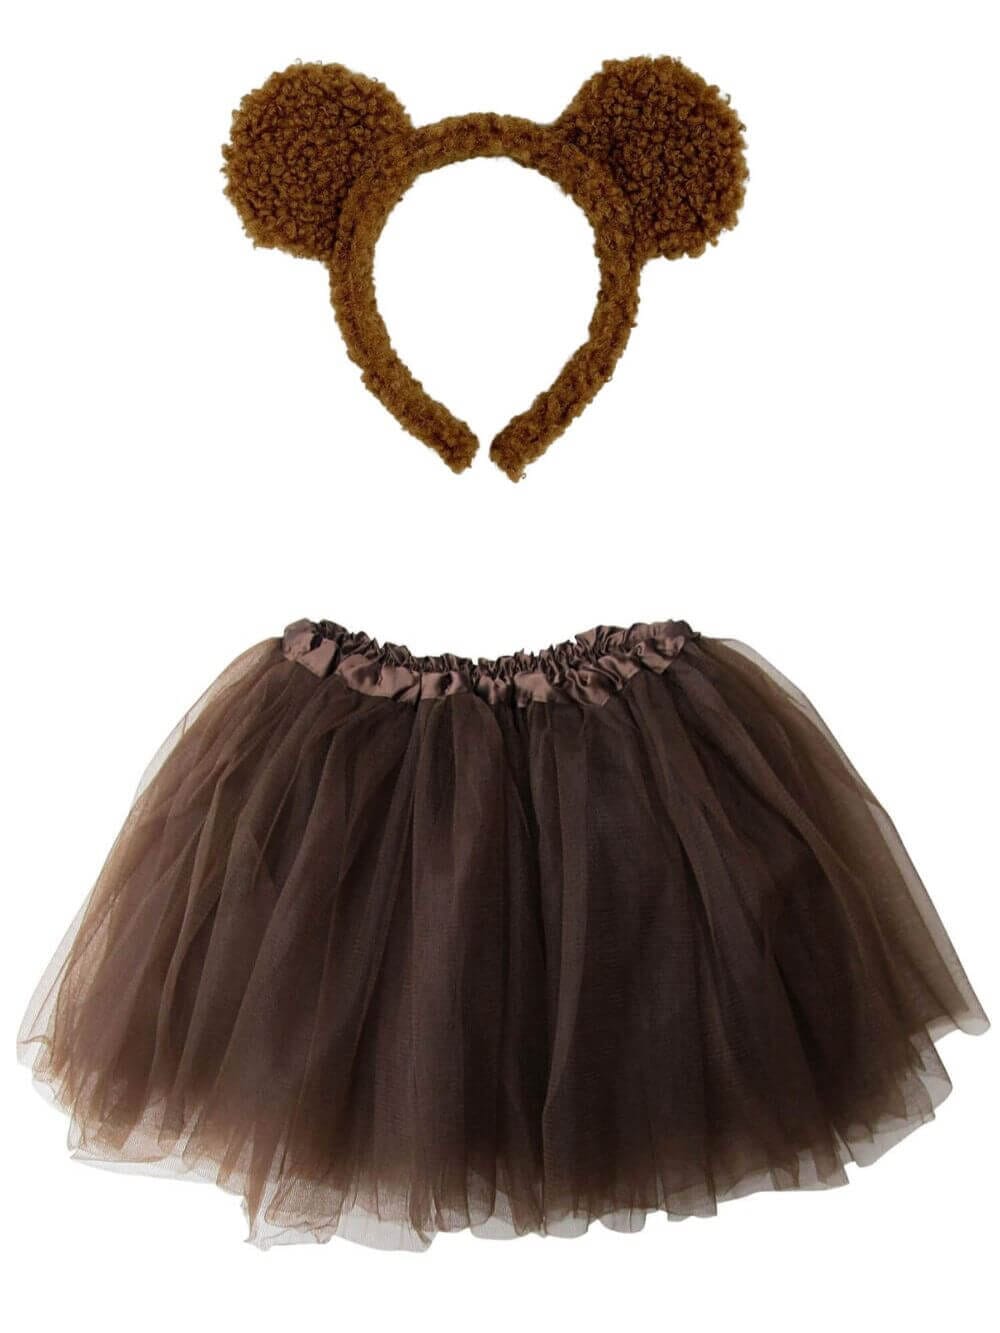 Brown Bear Costume - Complete Kids Costume Set with Tutu and Headband